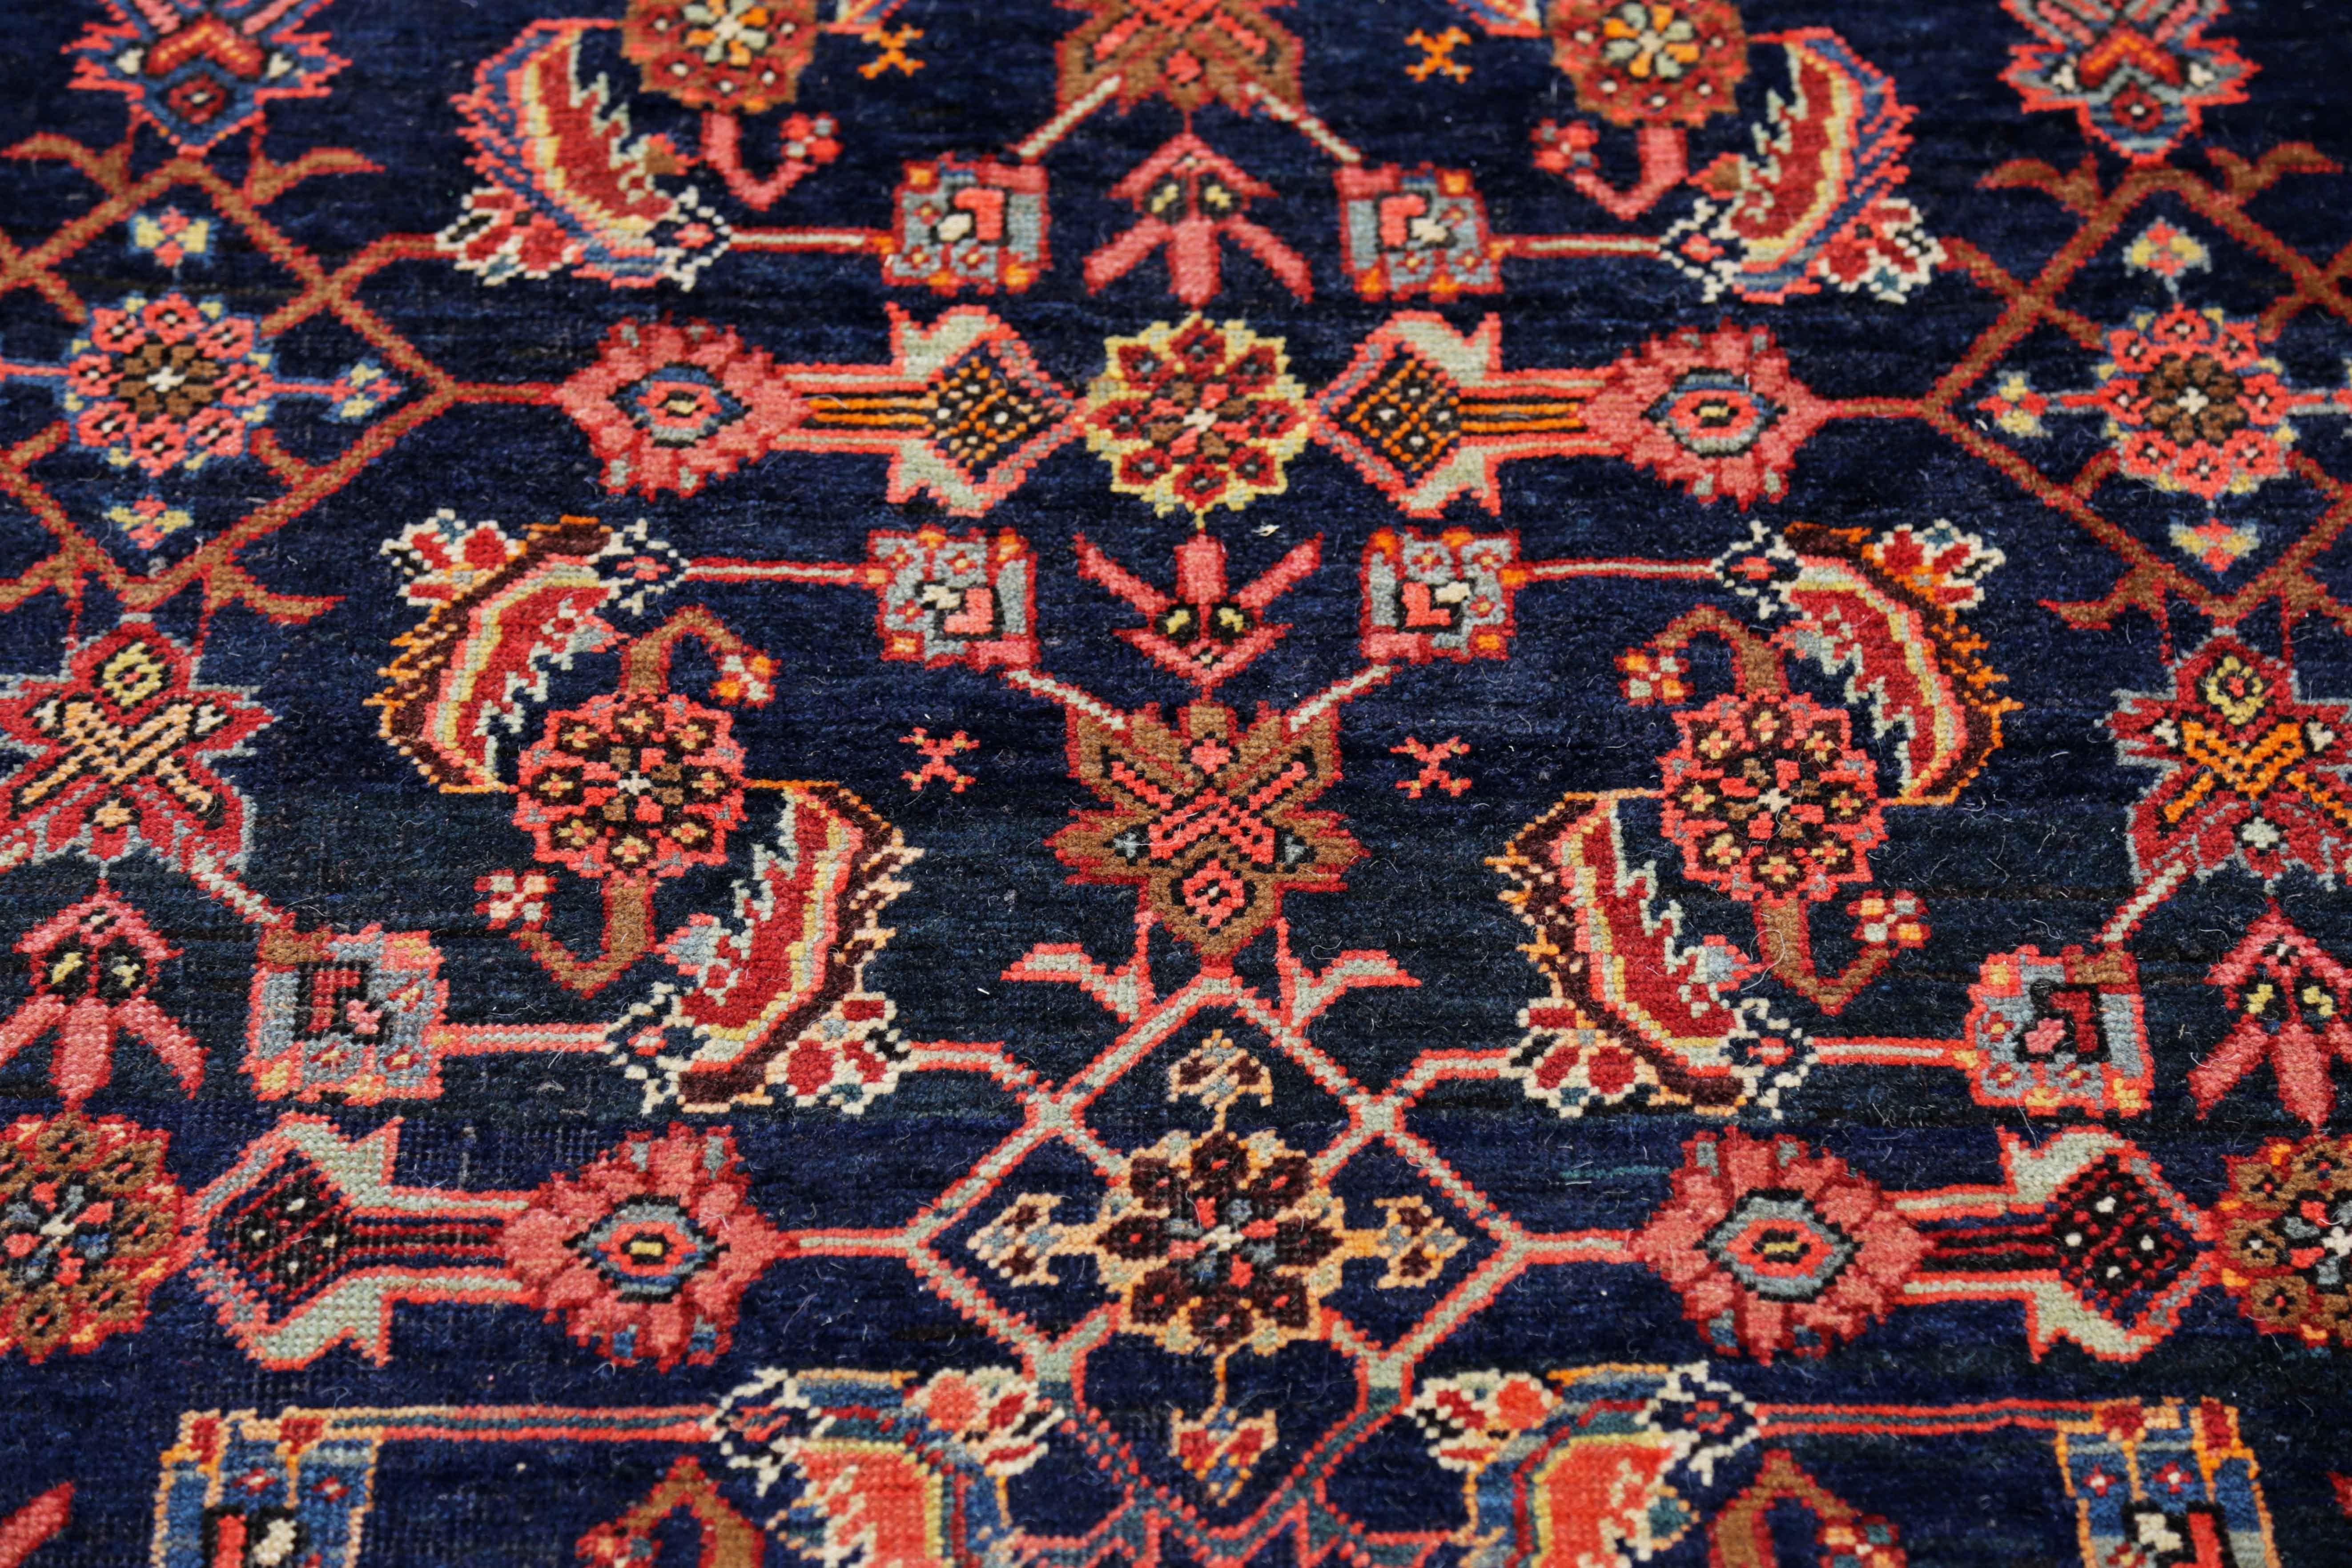 Hand-Woven Antique Persian Area Rug Bijar Design For Sale